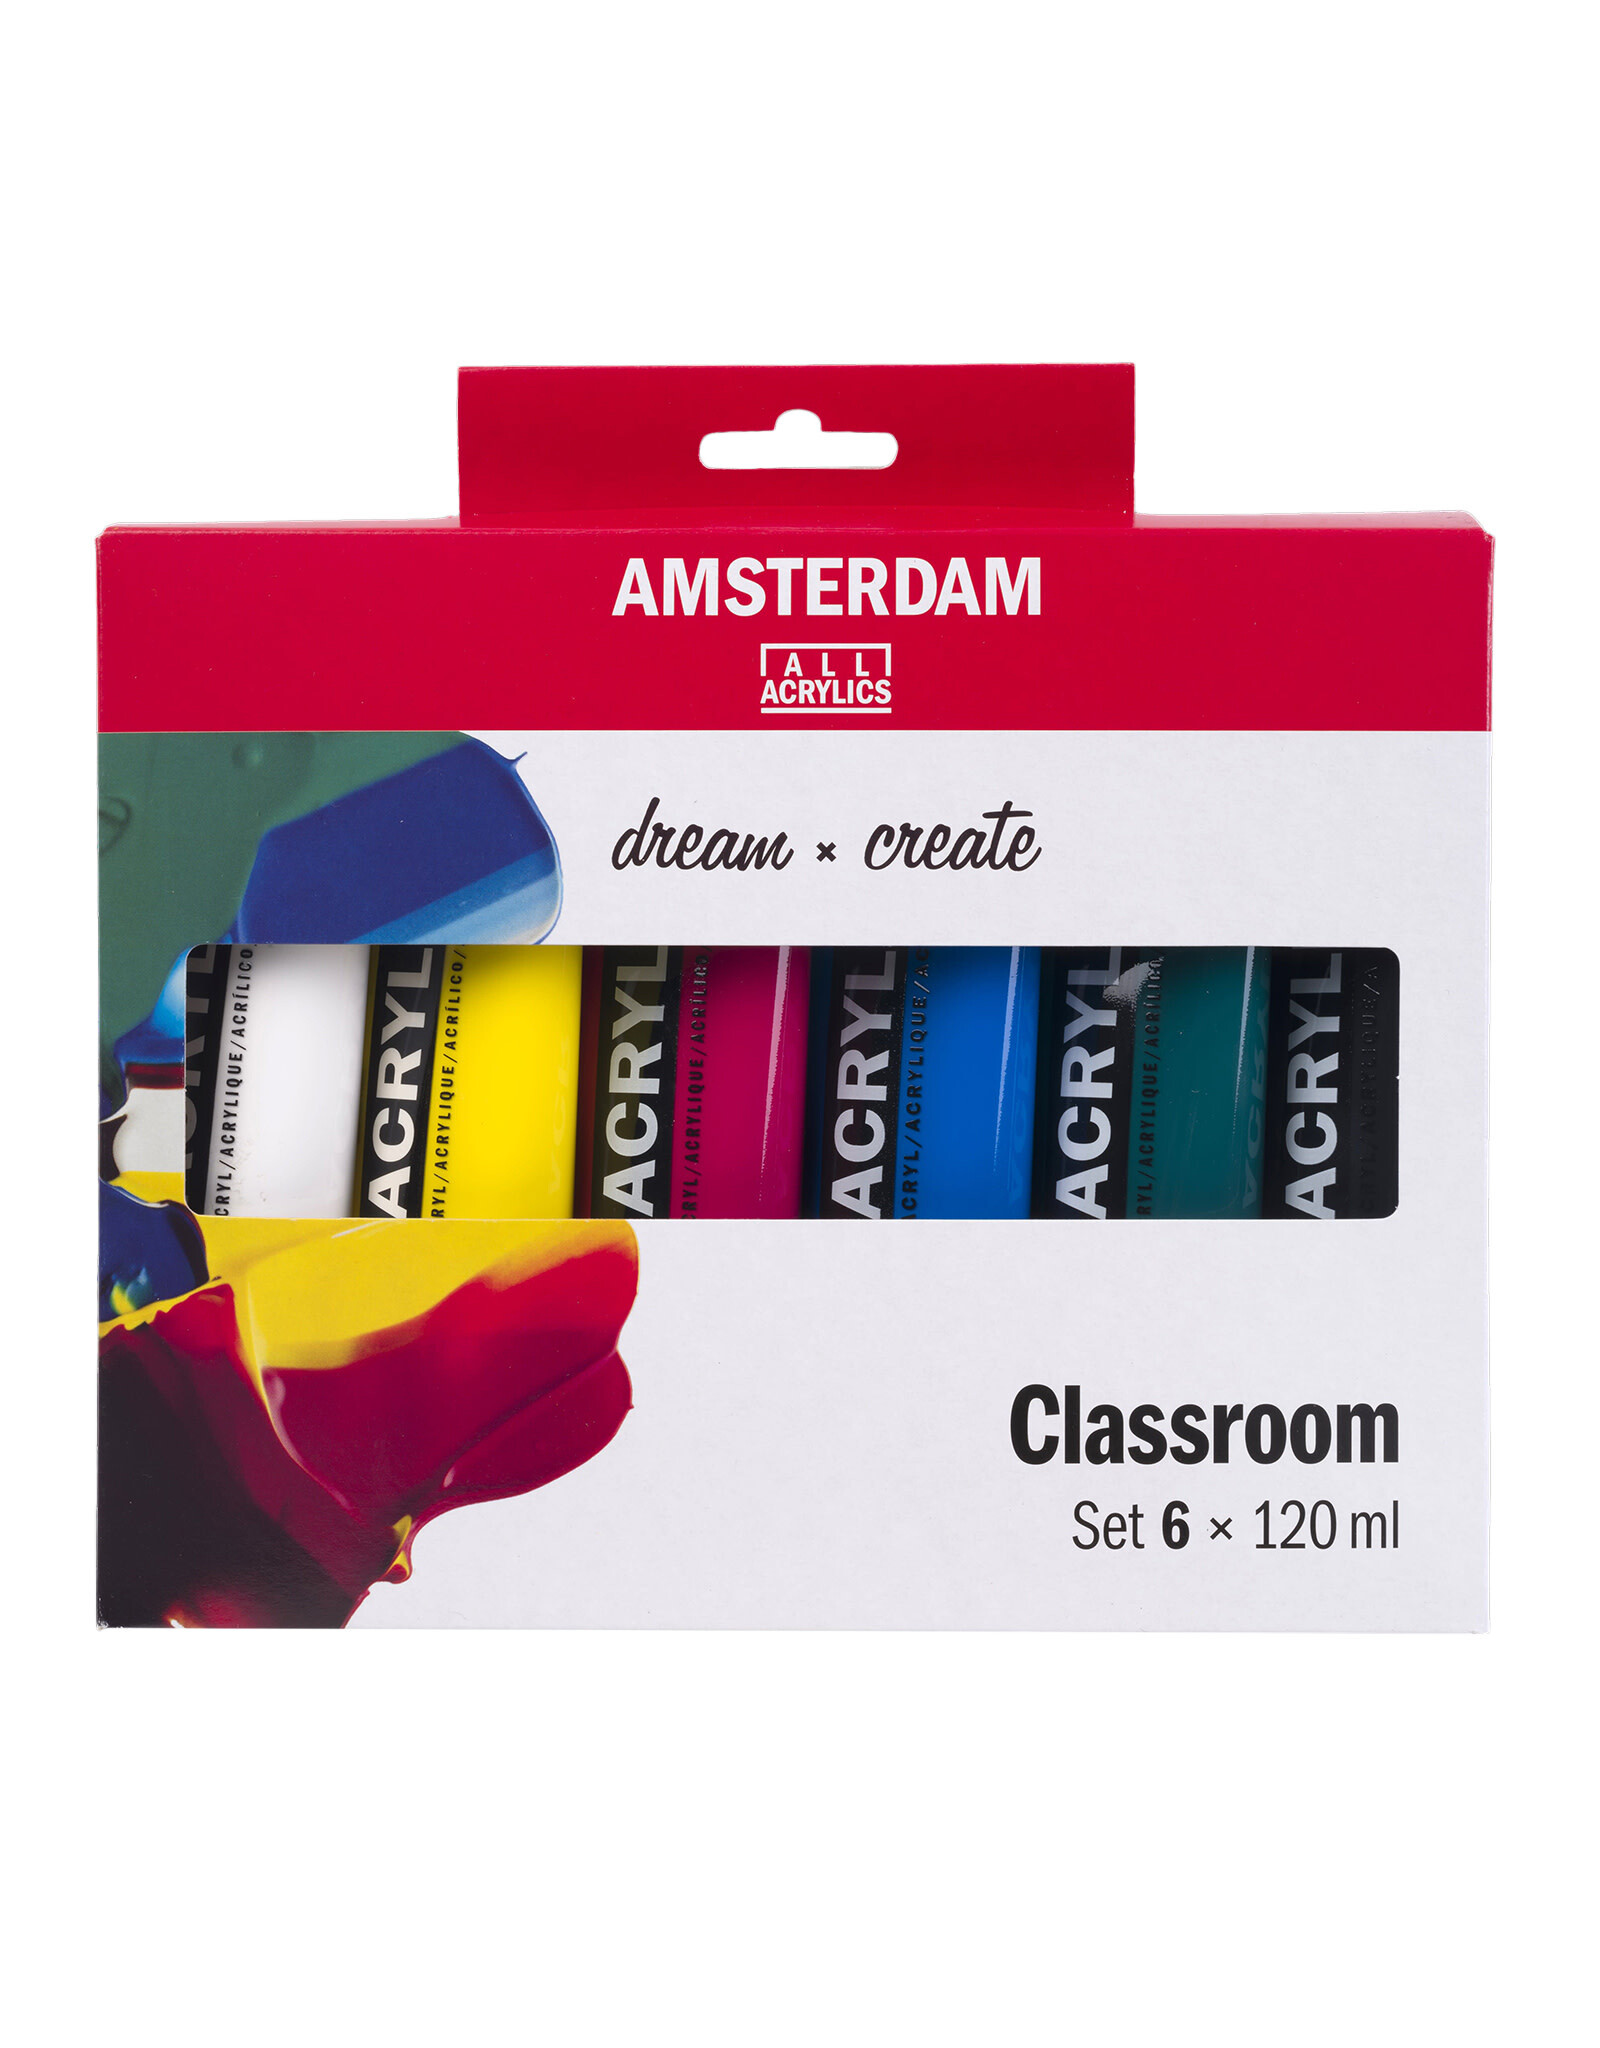 Royal Talens Amsterdam Standard Acrylic, Classroom Set of 6